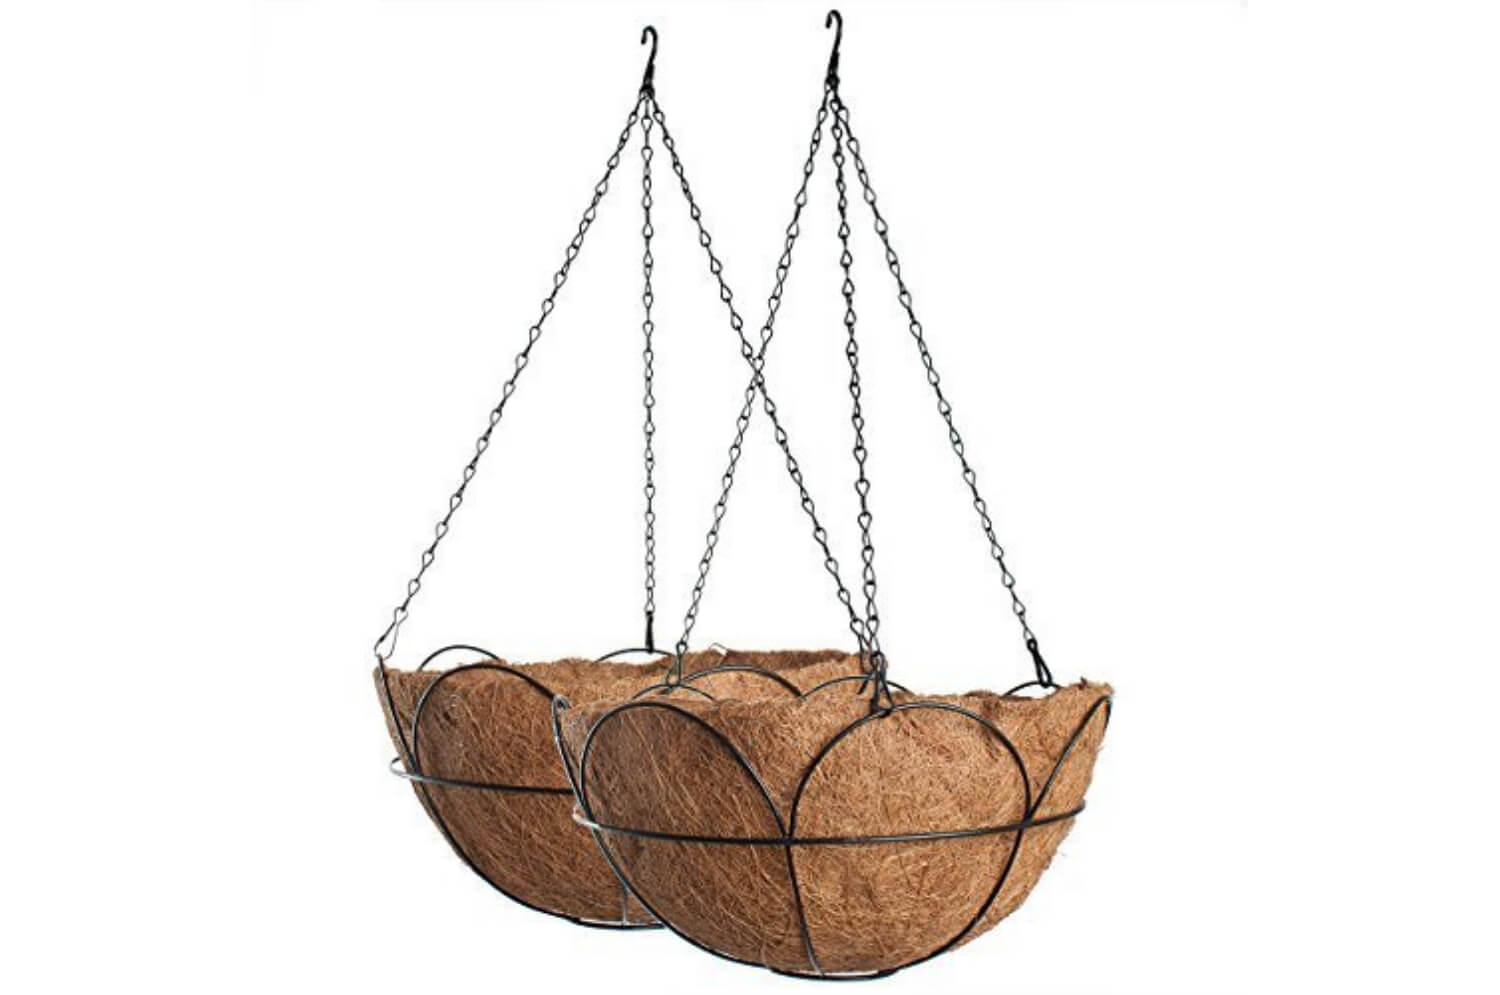 Hanging Coir Baskets